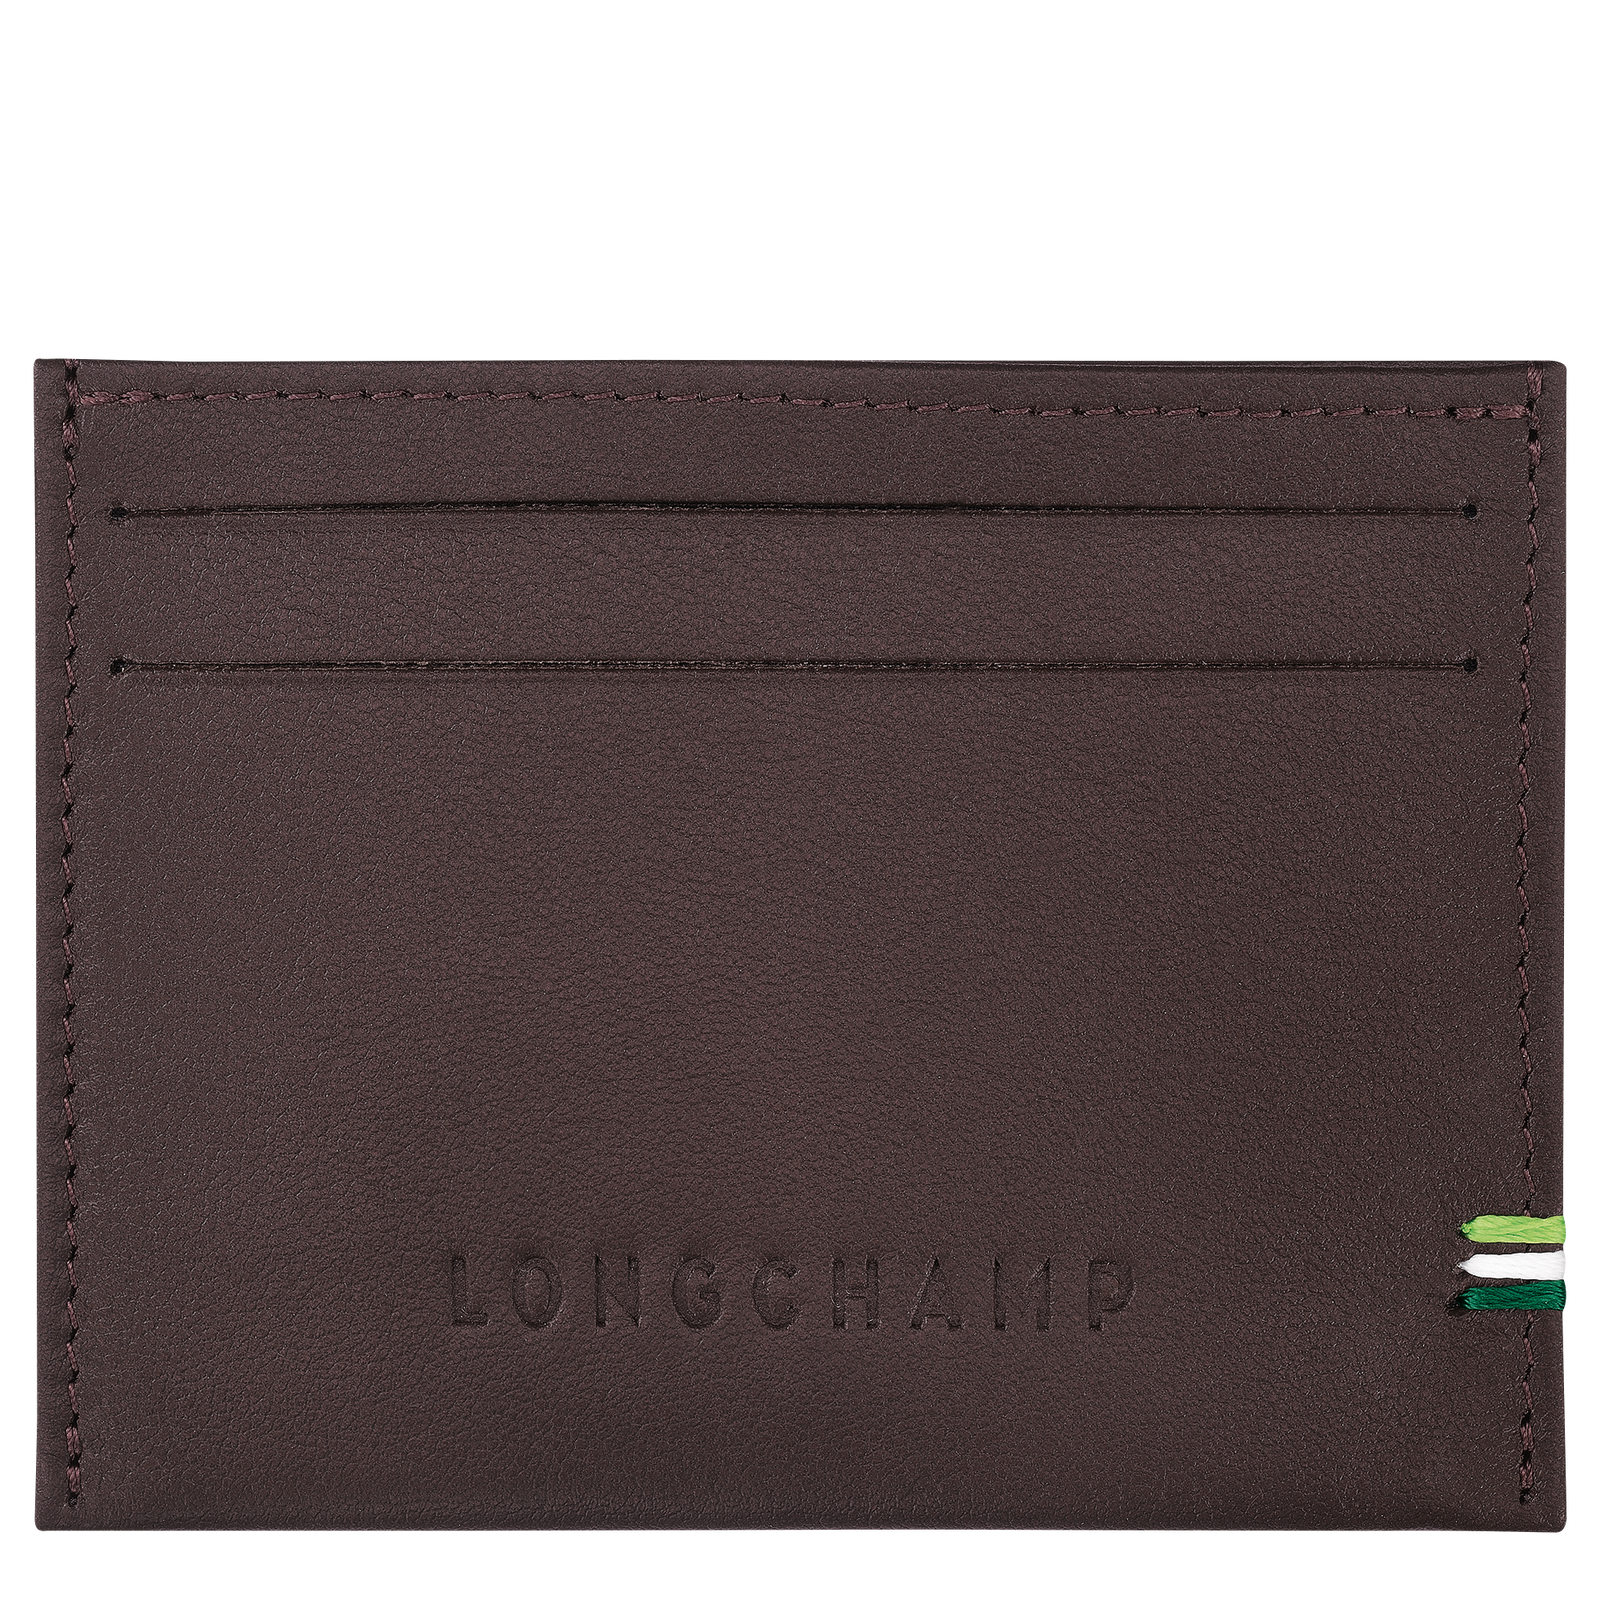 Longchamp sur Seine Card holder, Mocha